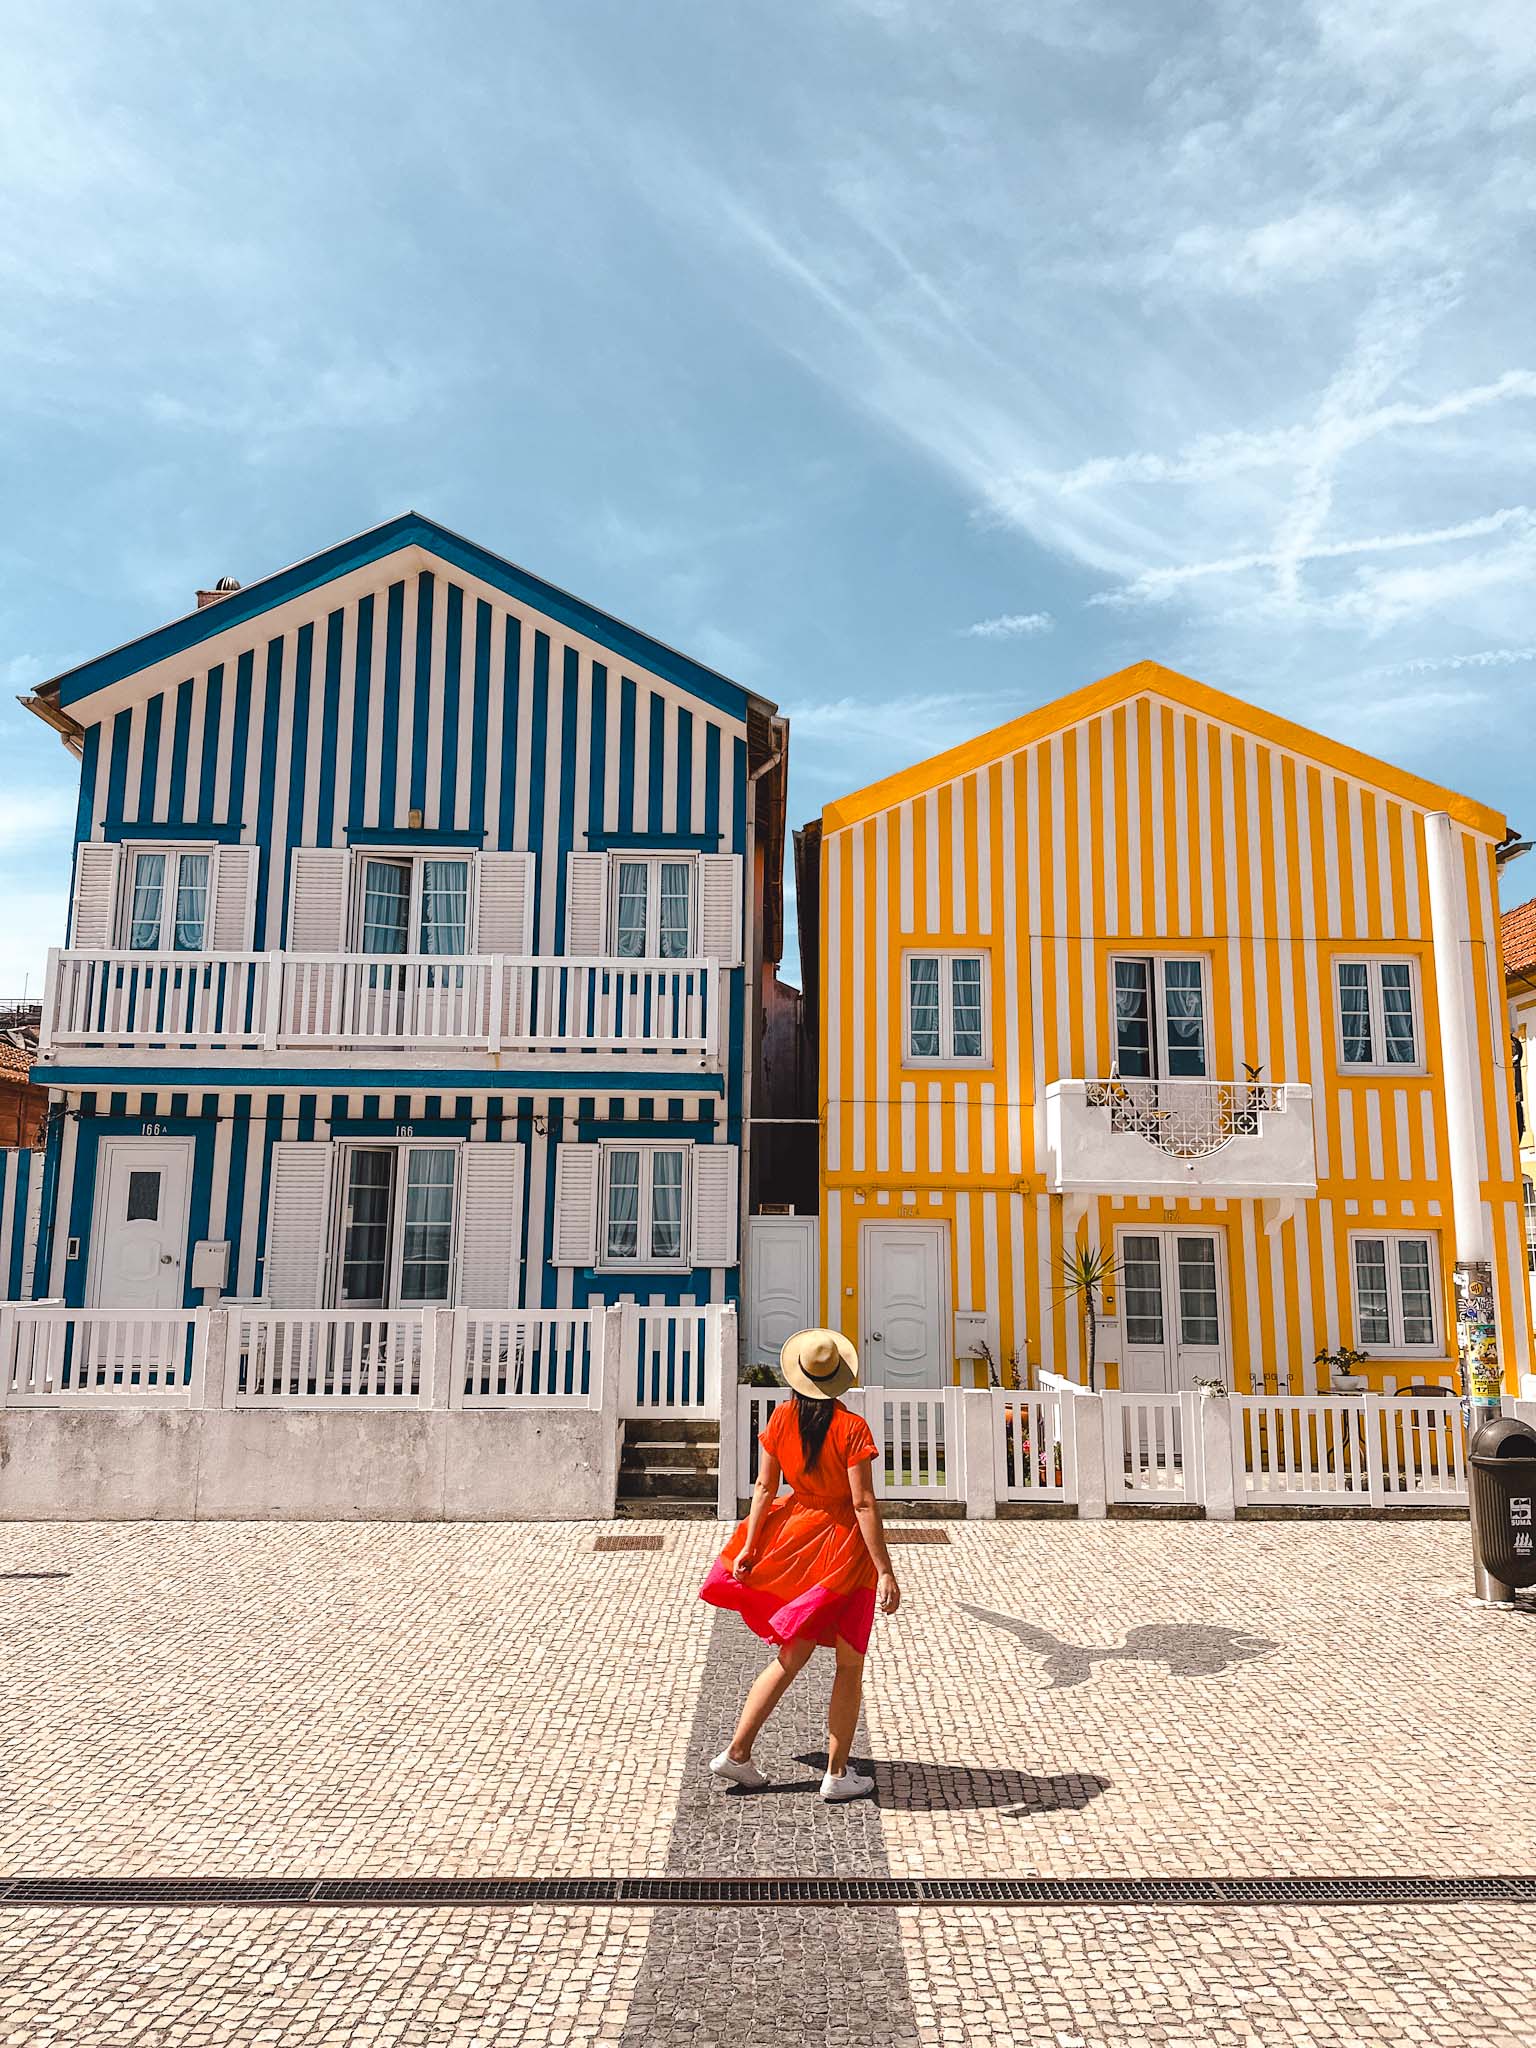 Best Instagram spots in Aveiro, Portugal - candy striped fishermen's houses at Costa Nova